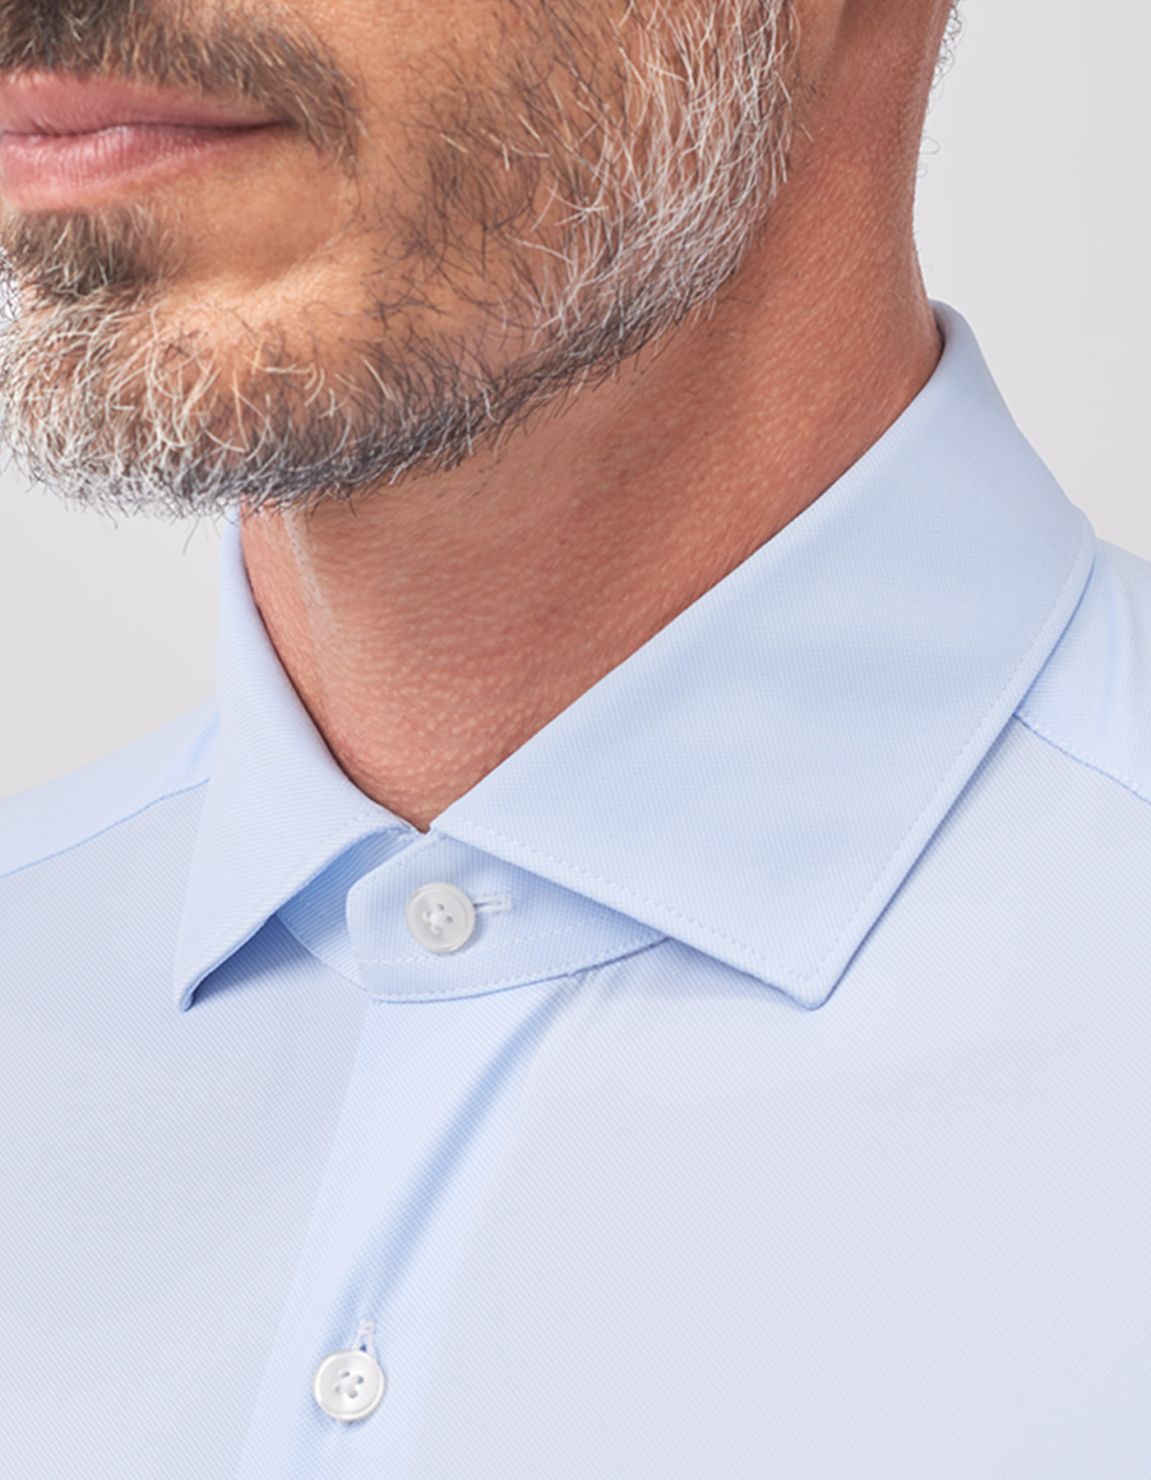 Shirt Collar small cutaway Light Blue Oxford Tailor Custom Fit 3